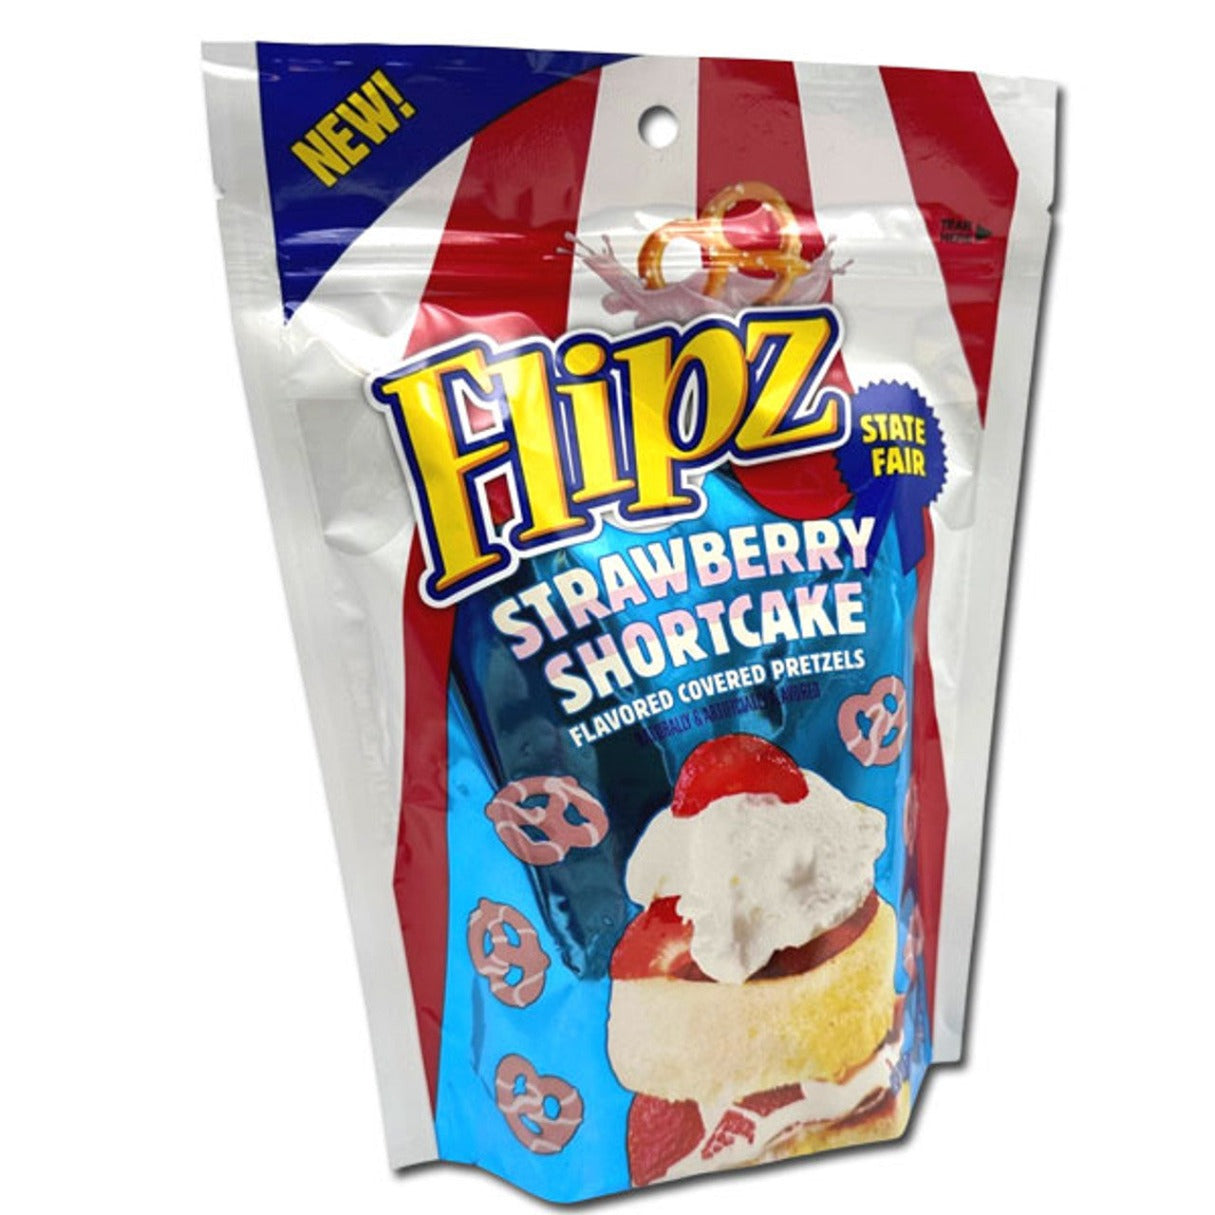 Flipz Strawberry Shortcake Flavored Covered Pretzels 6.5oz - 12ct